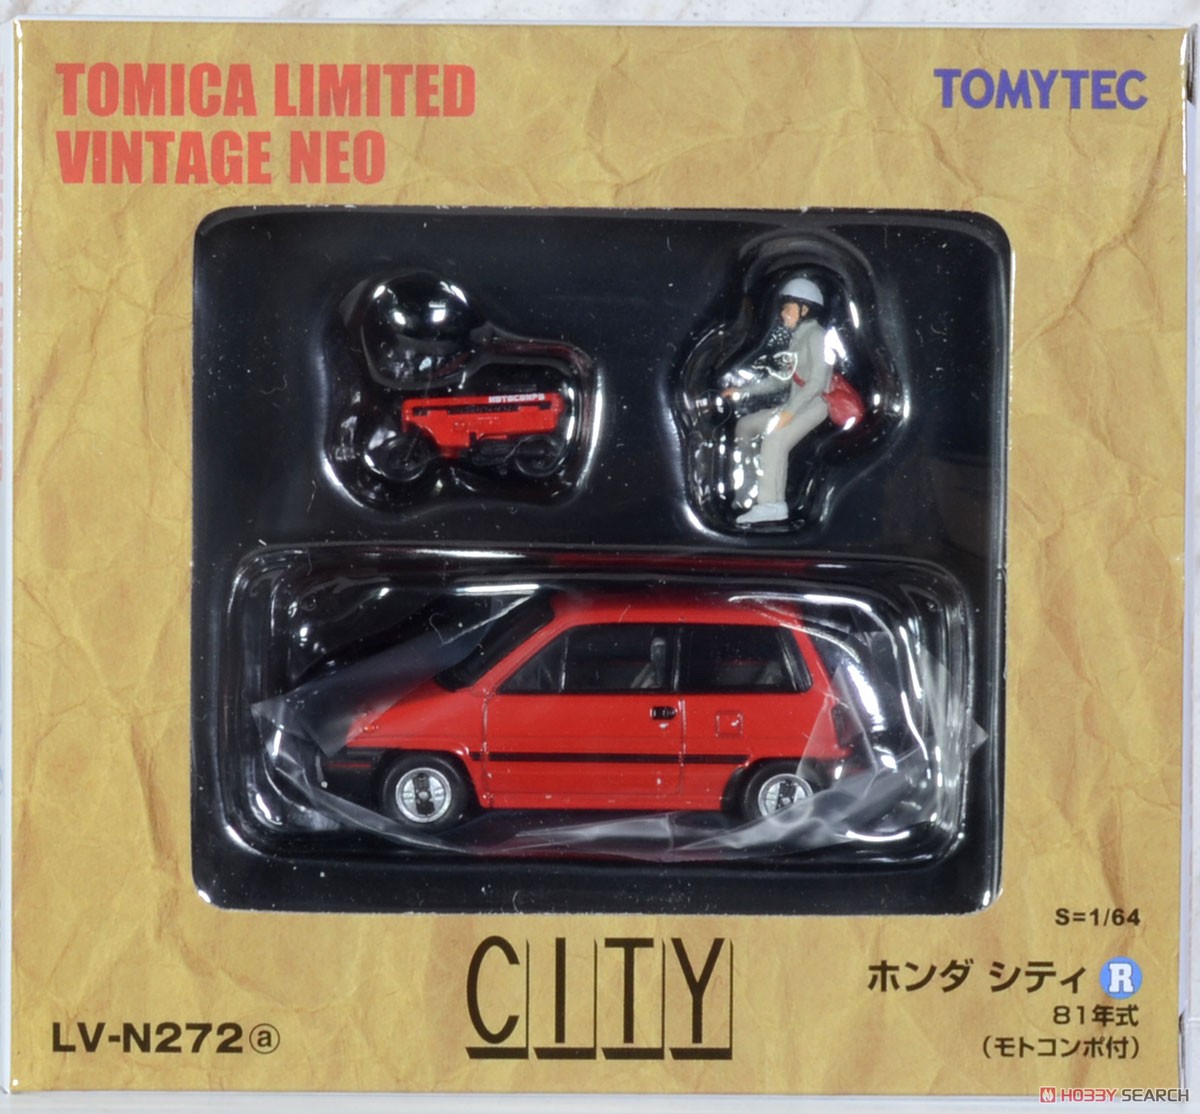 TLV-N272a Honda City R (Red) 1981 w/Motocompo (Diecast Car) Package1